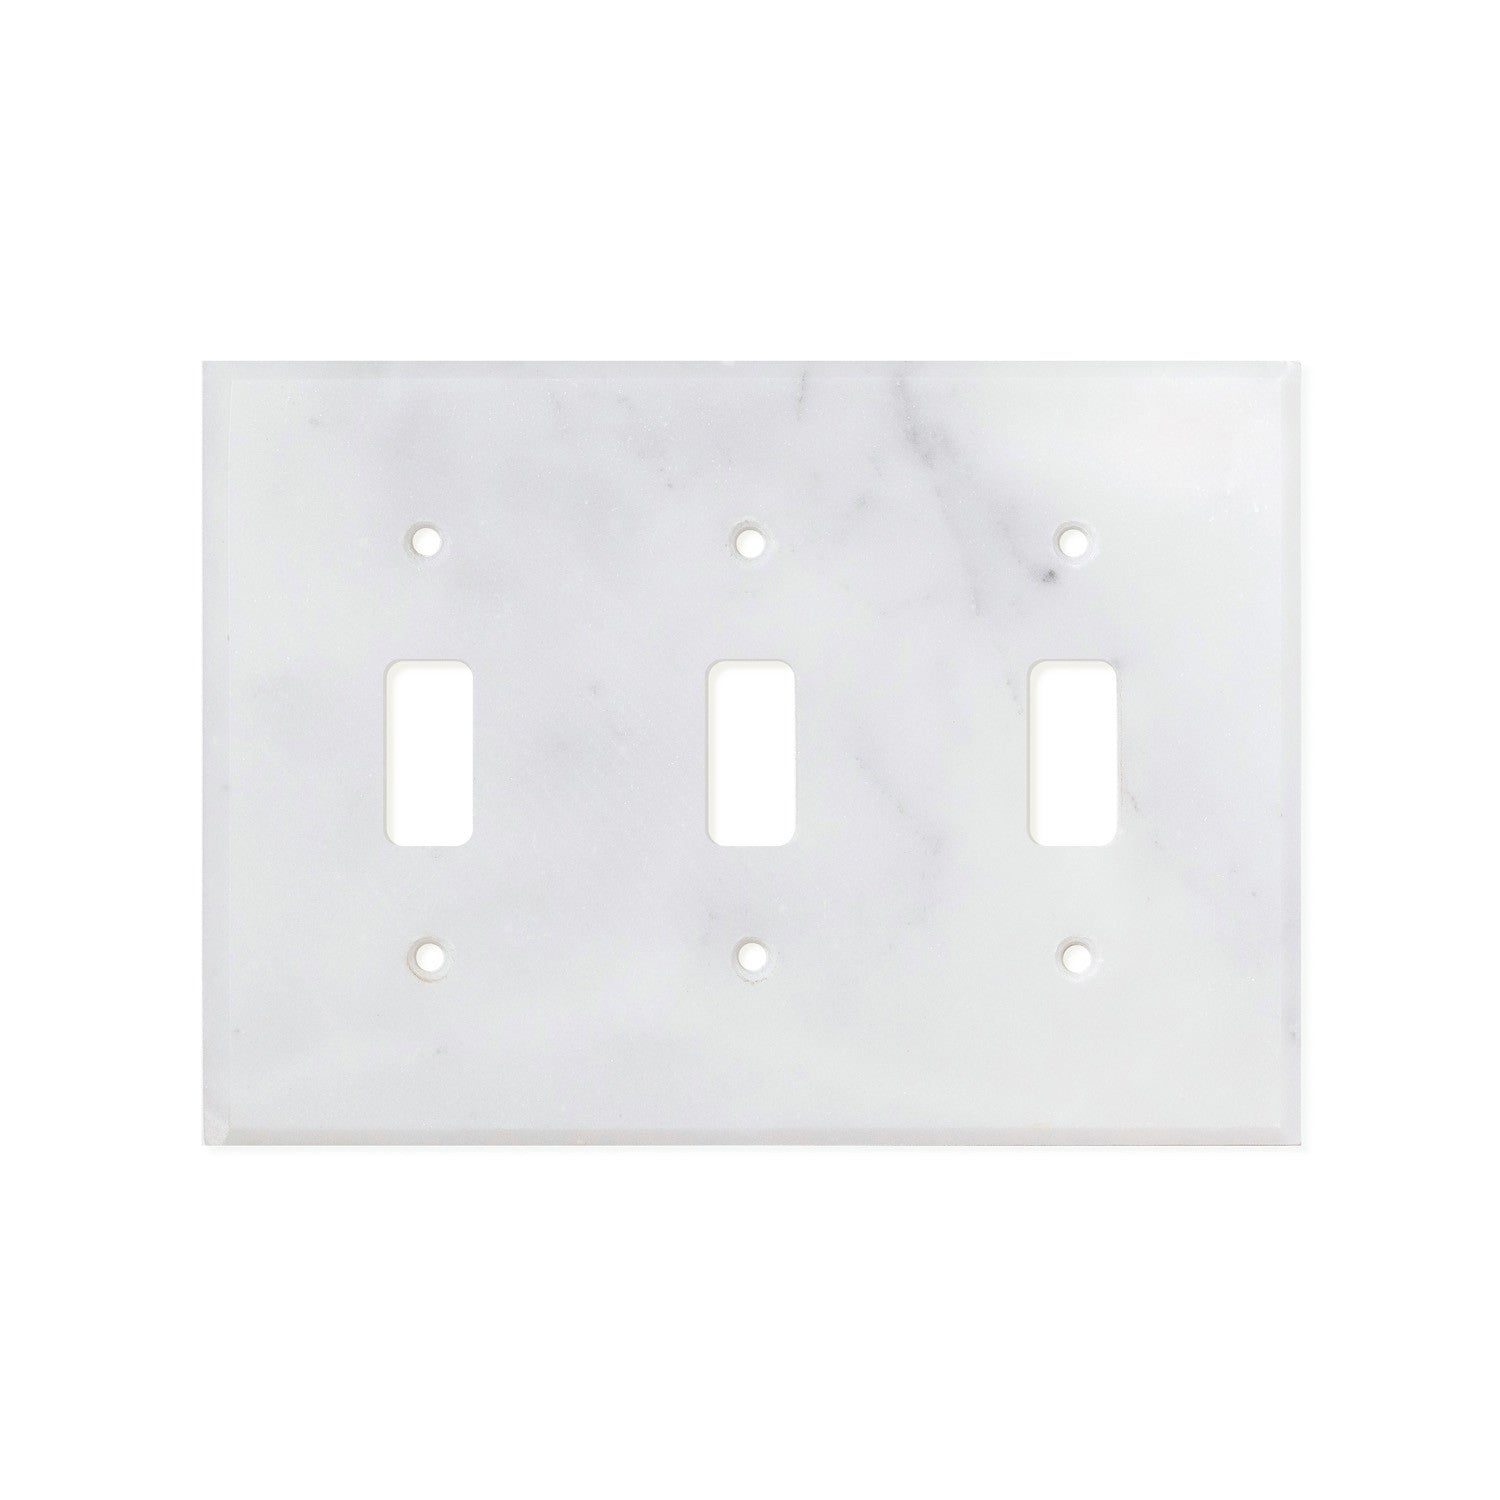 Bianco Carrara (Carrara White) Marble Switch Plate Cover, Polished (3 TOGGLE) - Tilephile